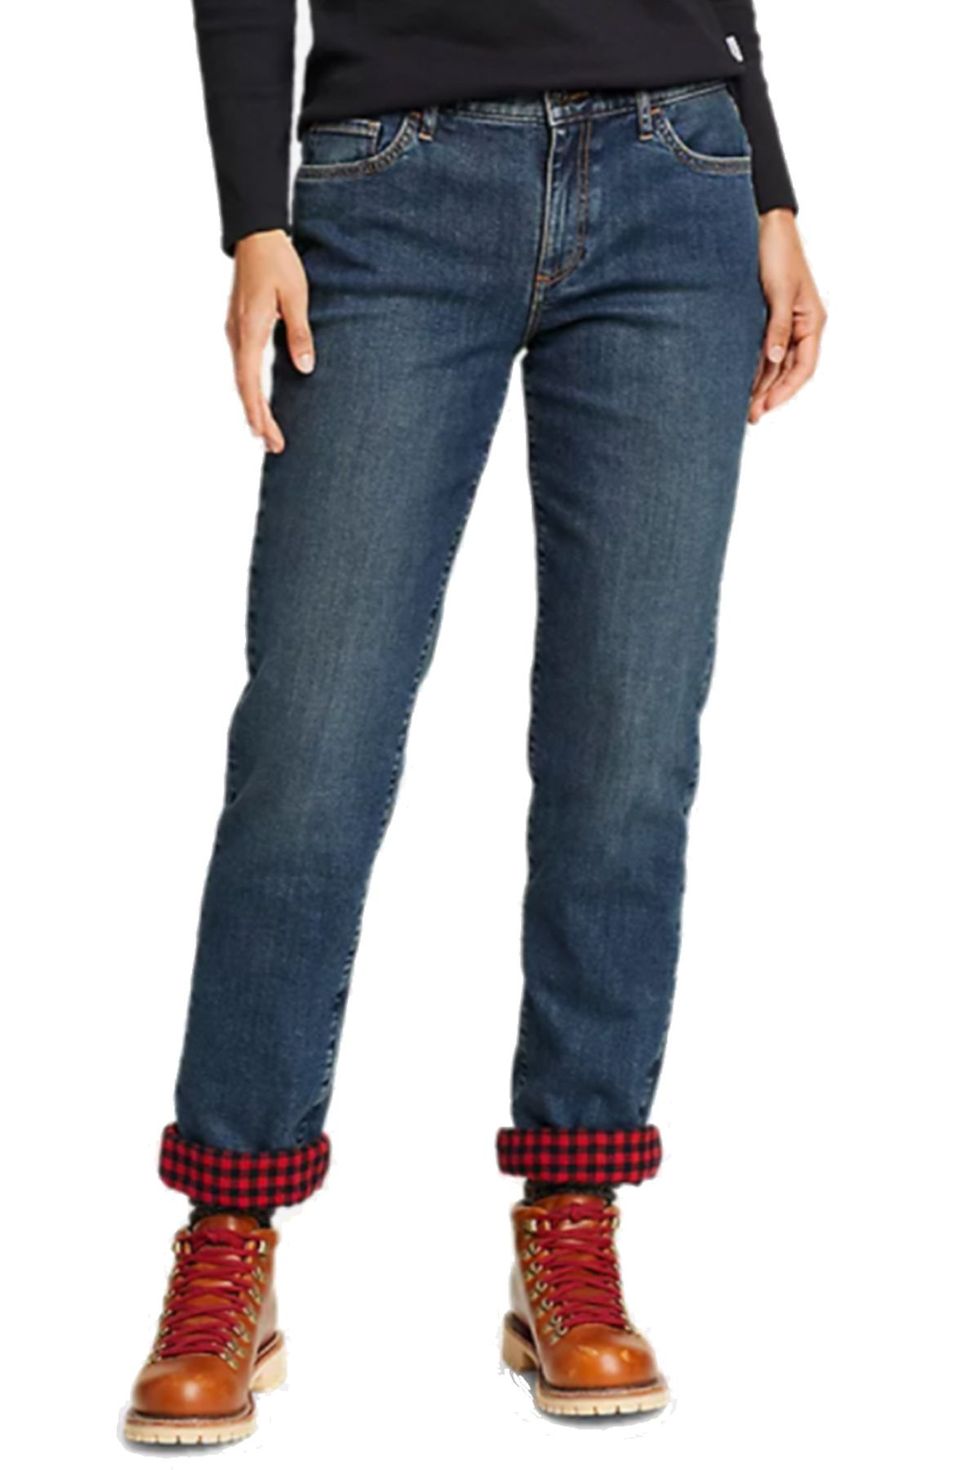 Eddie Bauer Women's Revival High Rise Fleece-Lined Jeans